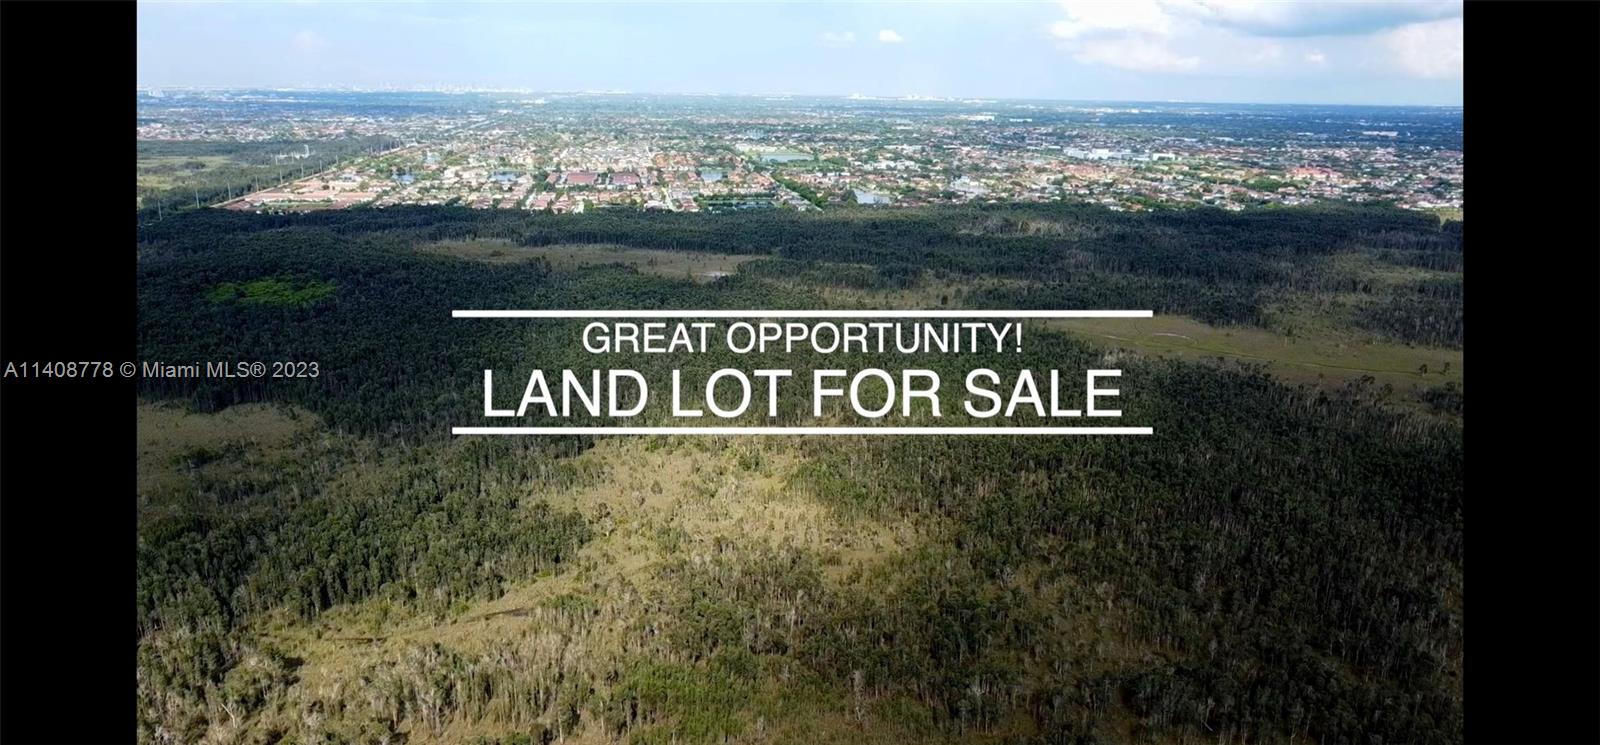 Property for Sale at Parcel 22 Miami Everglade Land Comp, Miami, Broward County, Florida -  - $700,000